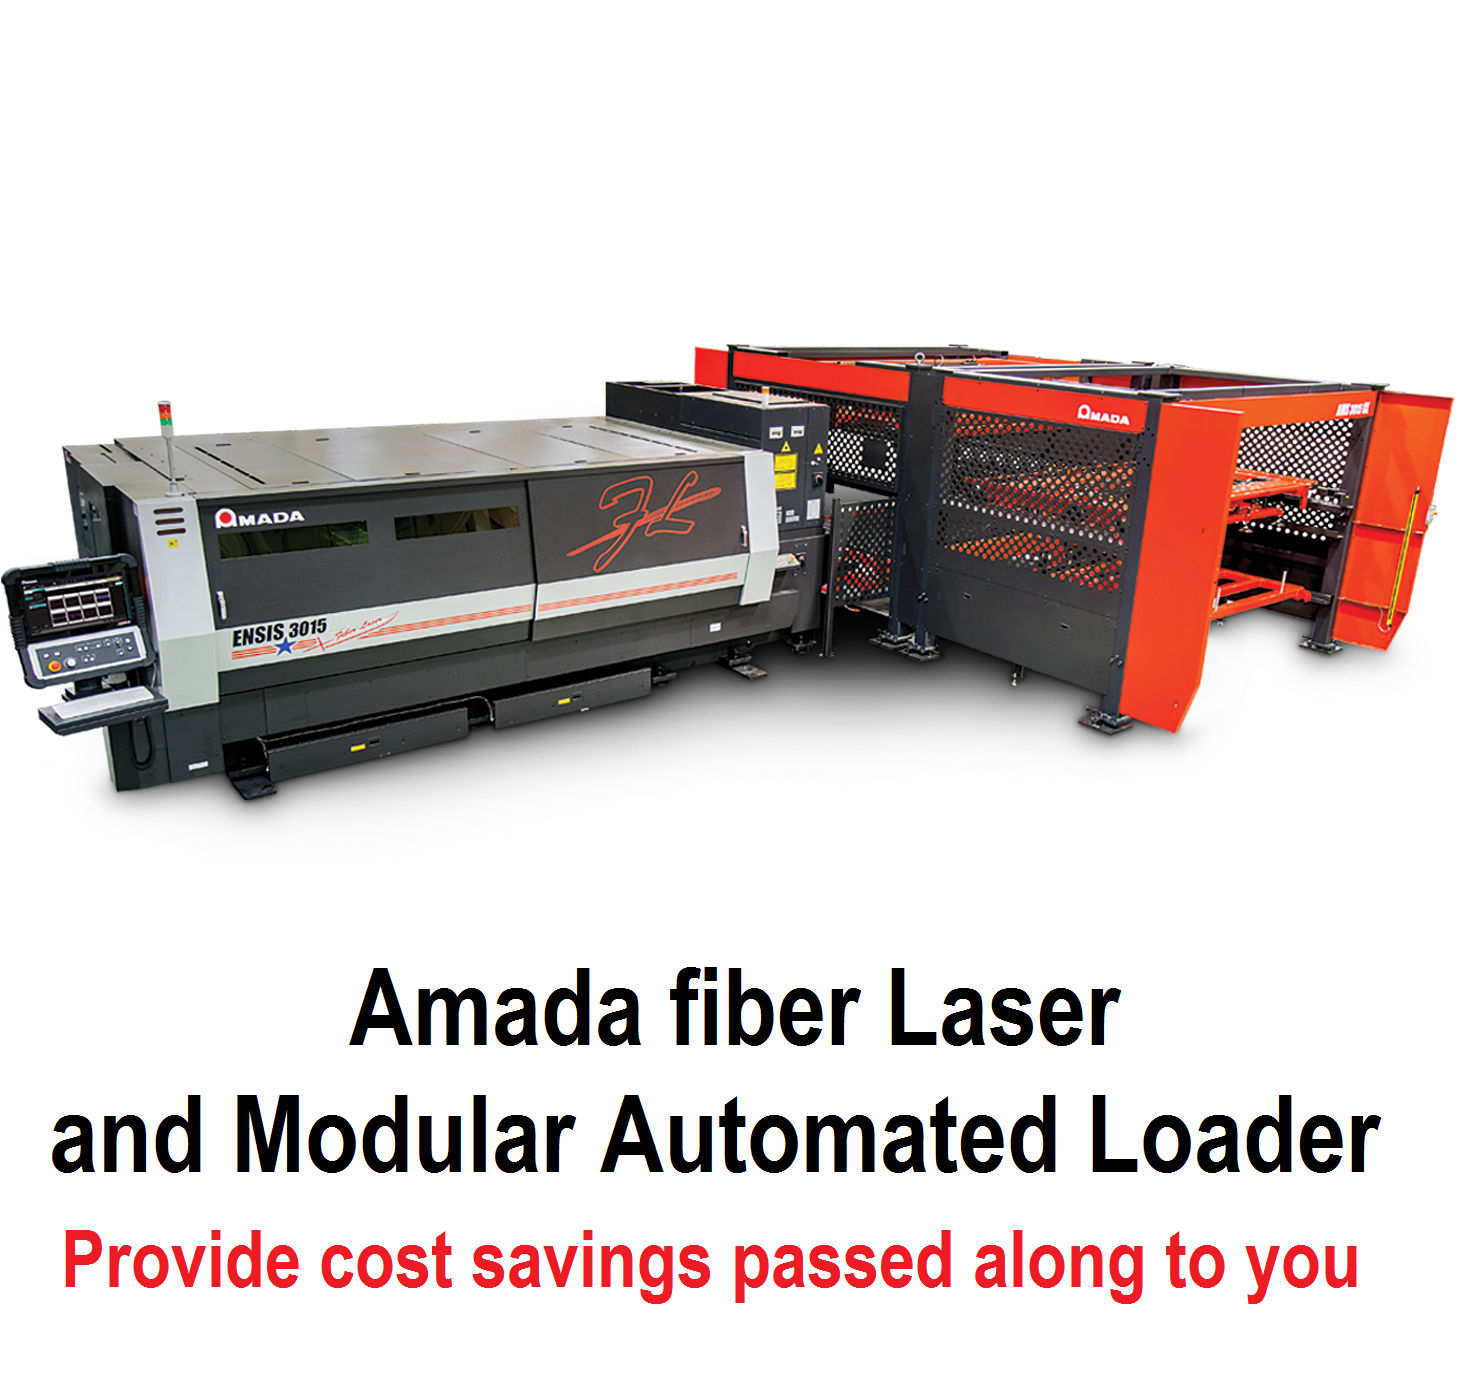 Cost saving proprietary fiber laser technology